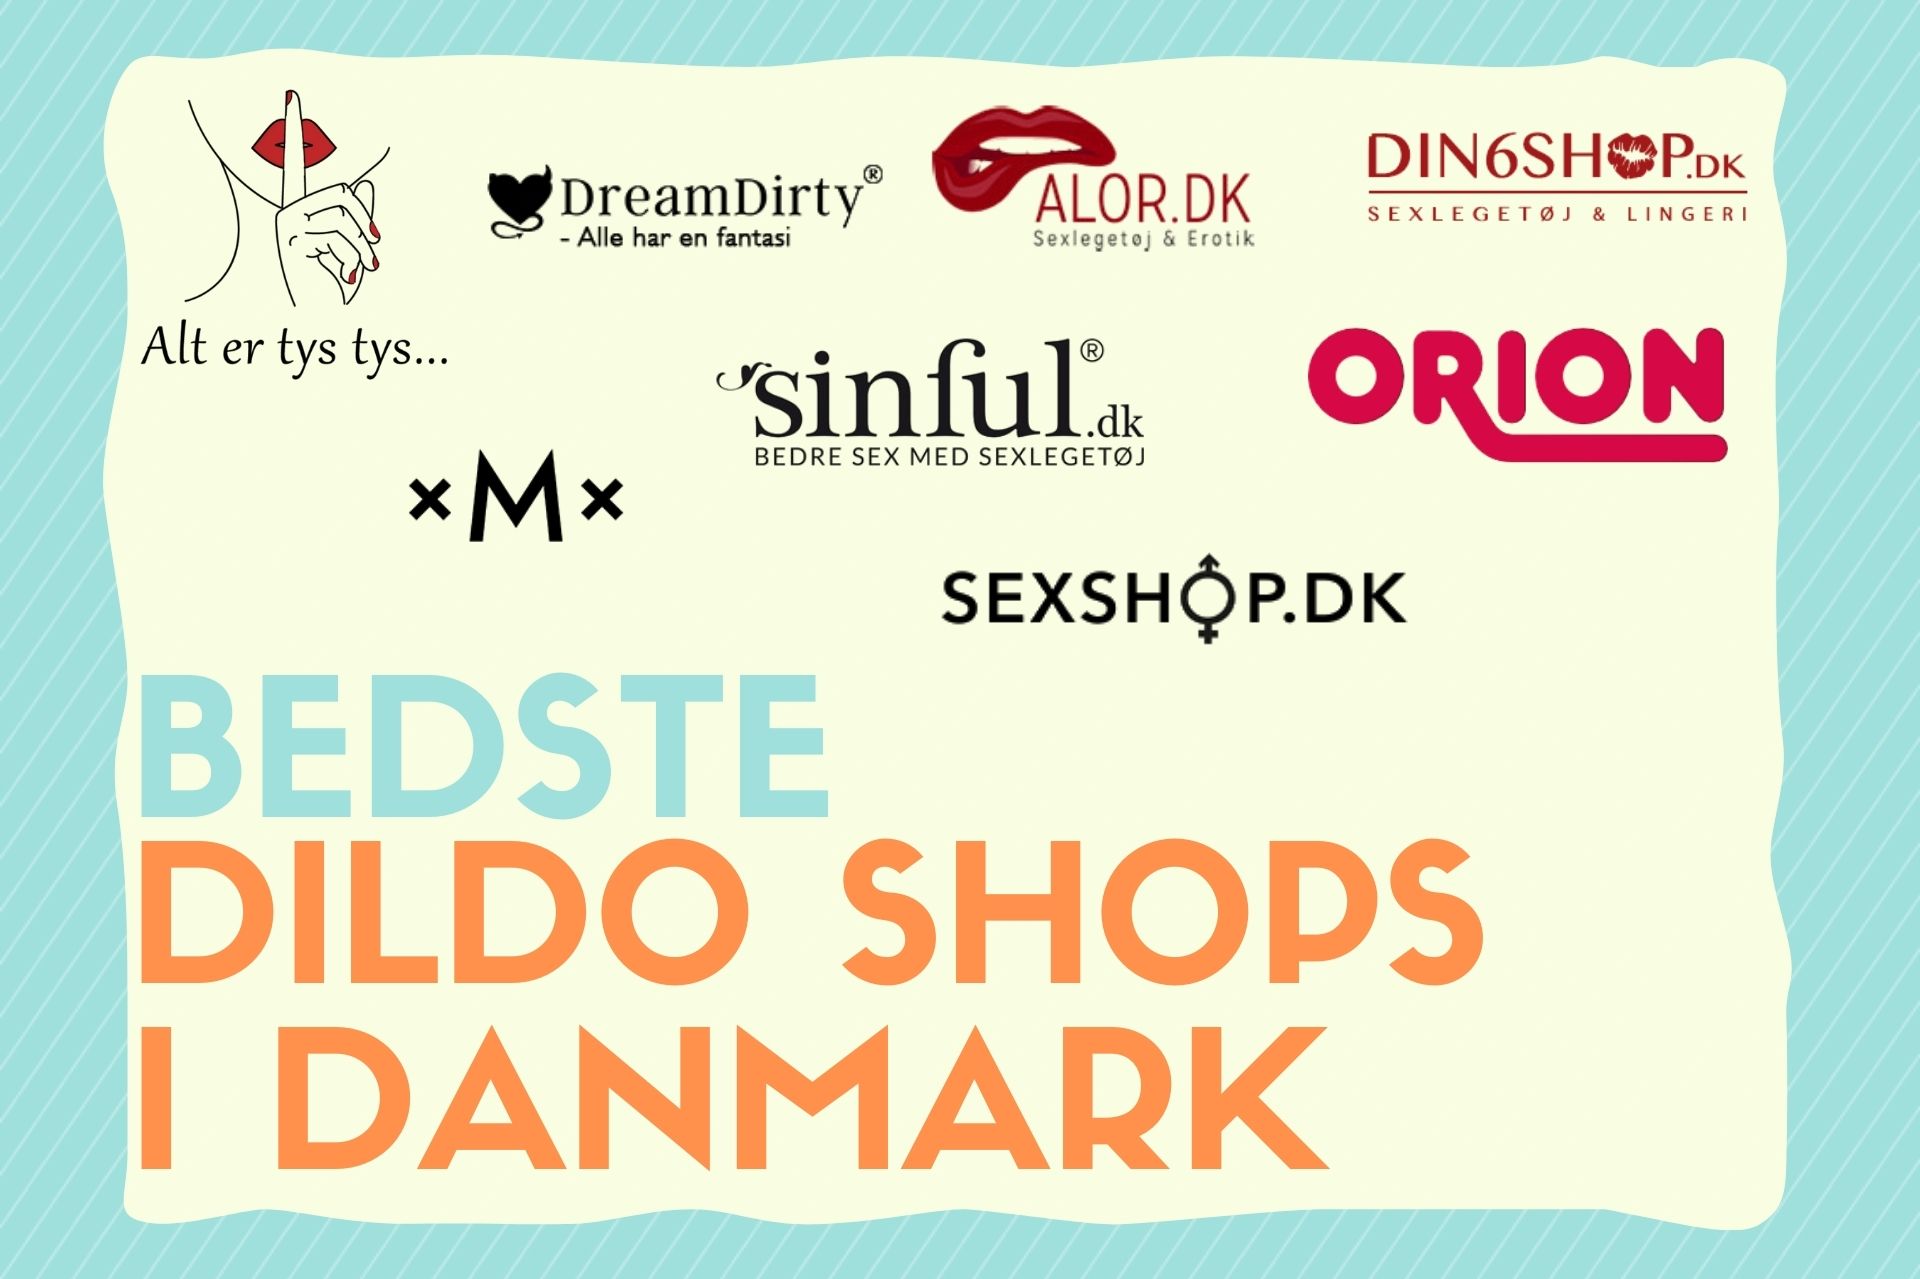 Bedste dildo shop – Her er de bedst i Danmark 1